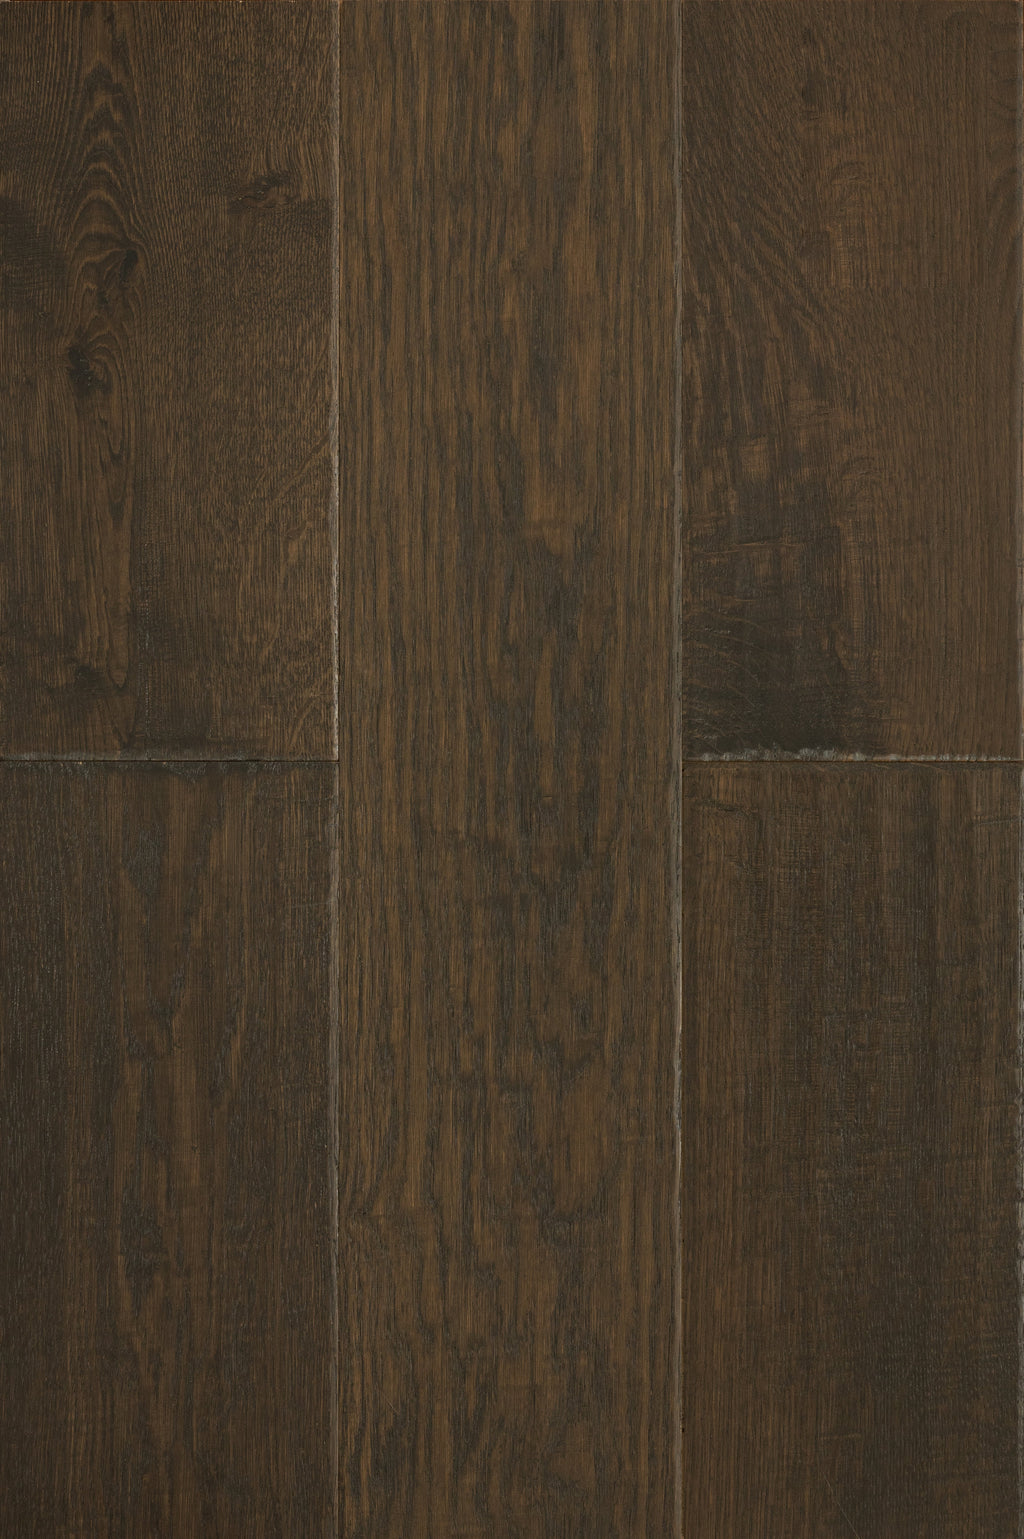 East West Furniture SP-7OH05 Sango Premier Engineered Wood Flooring - European Oak - 1/2 in x 7 in x Random Length Handscraped, 26.24 sqft/box, Shadow Grey